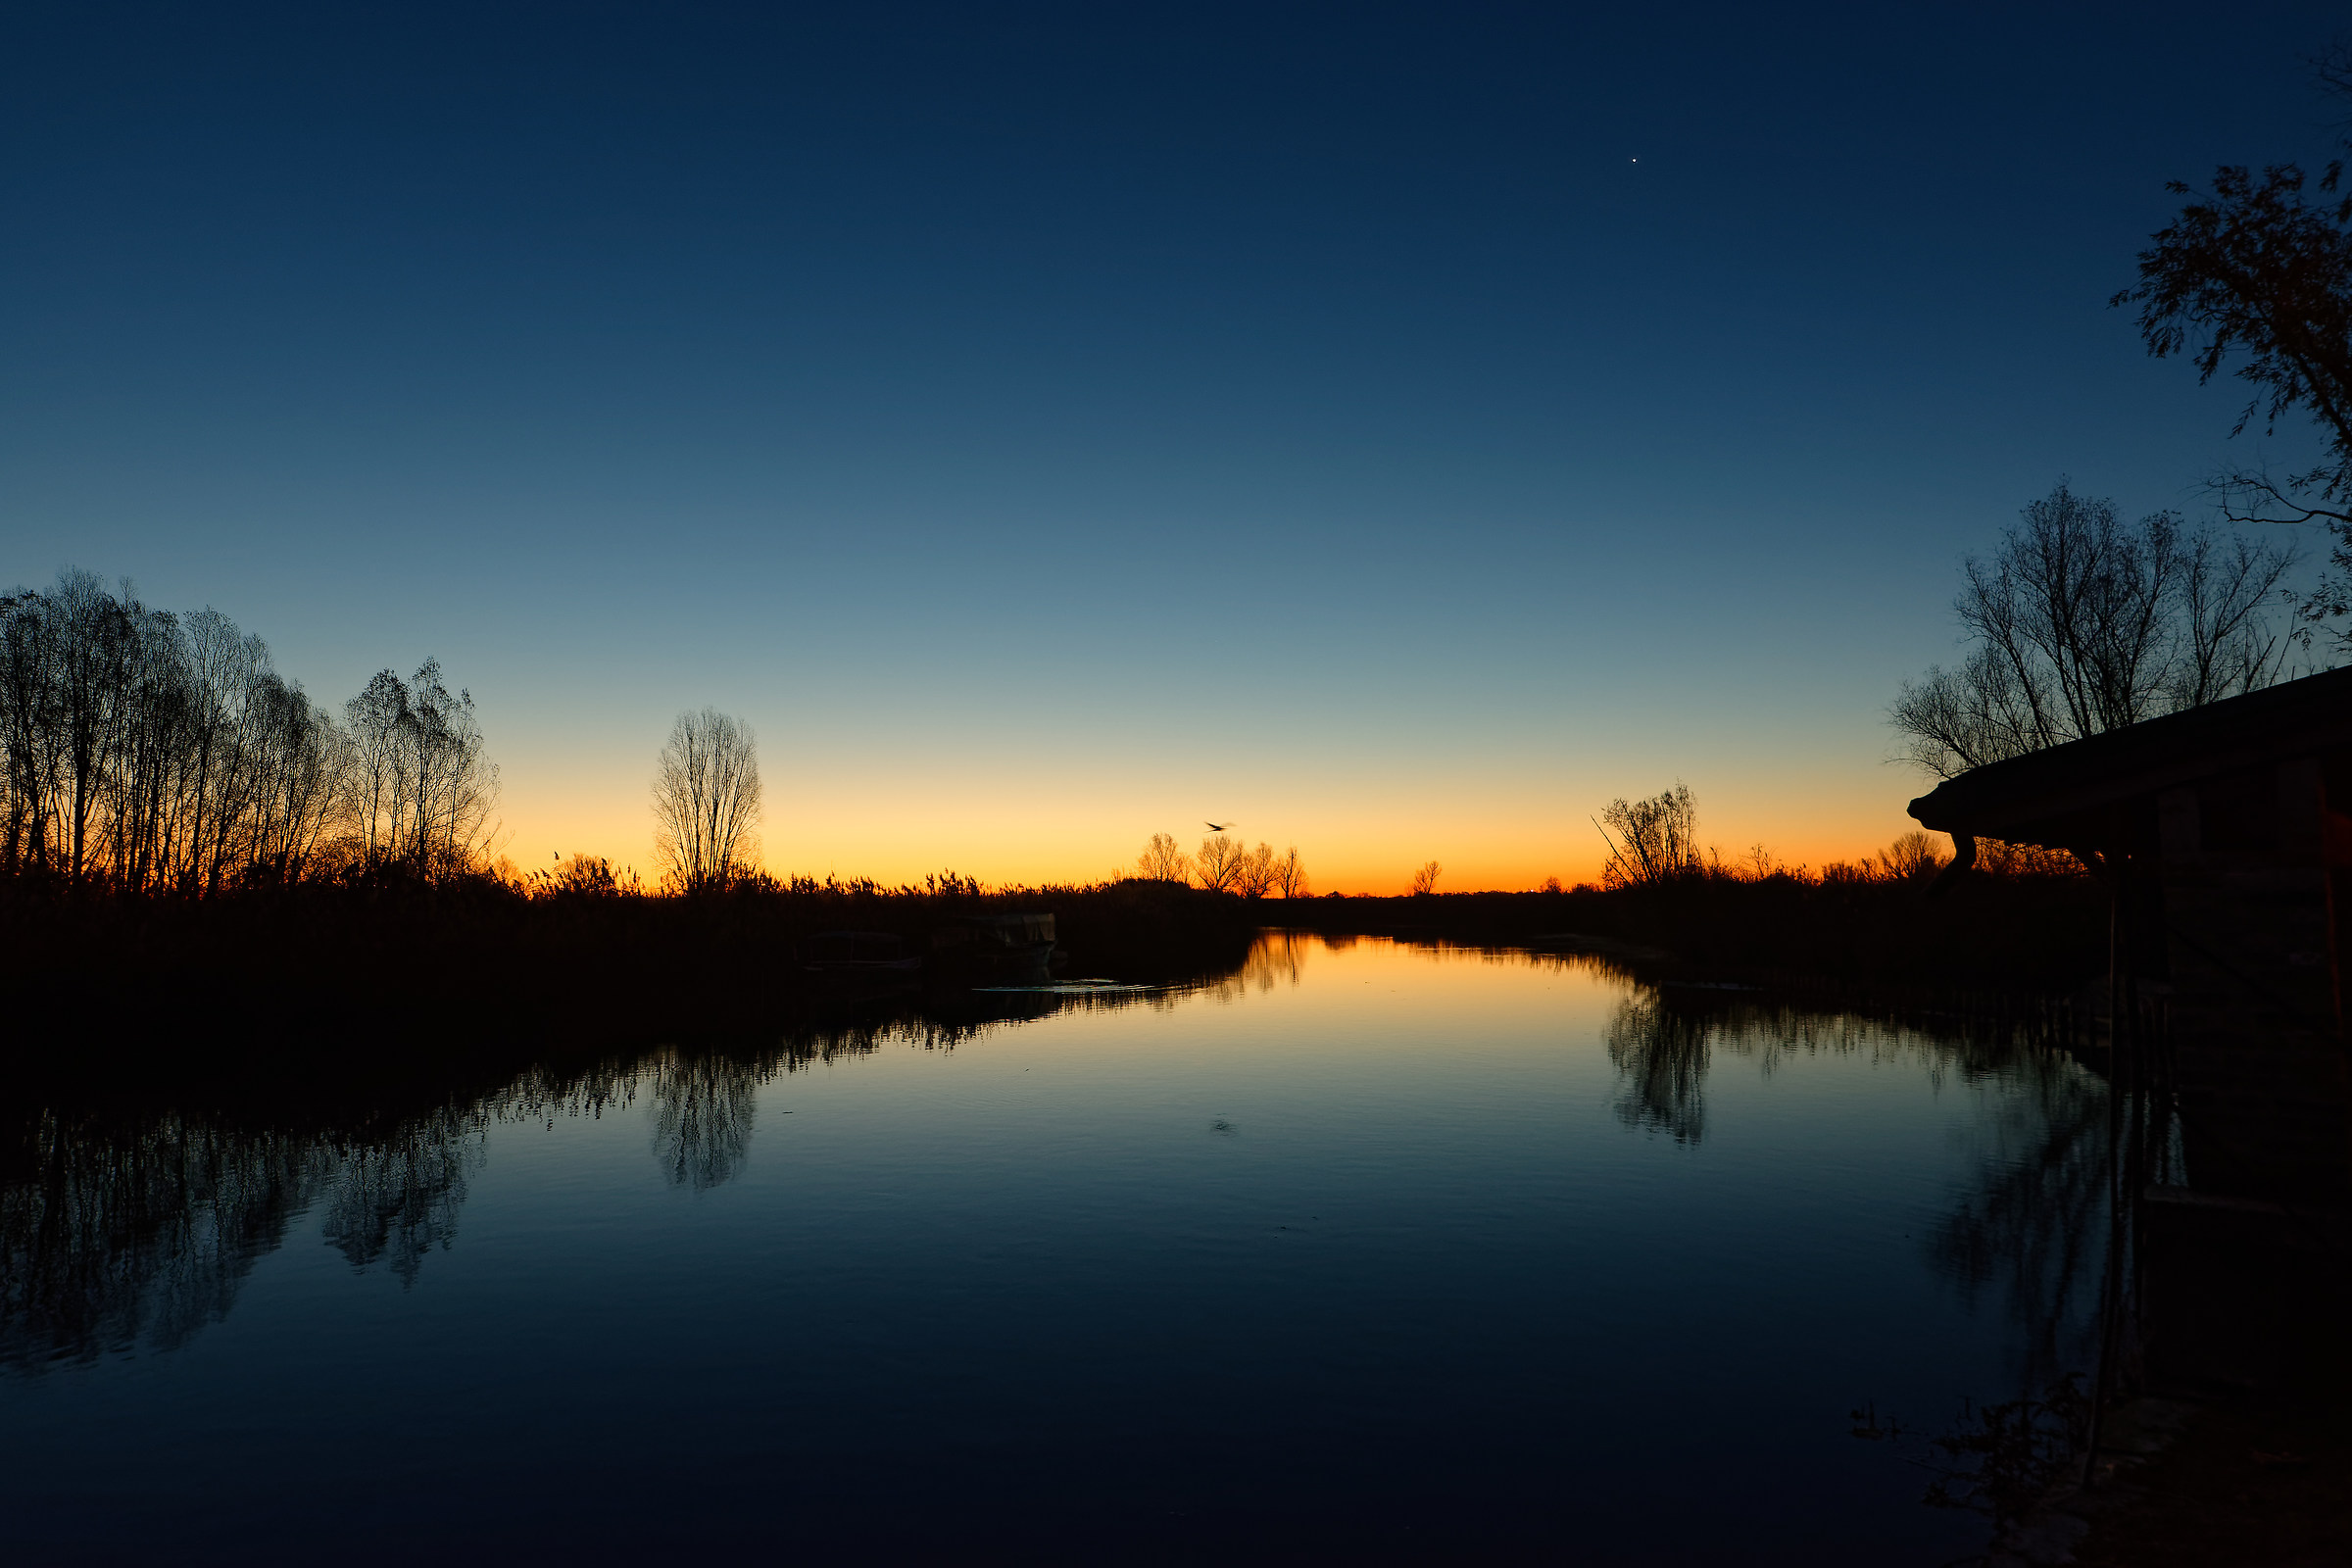 Dawn on the banks of the Mincio...